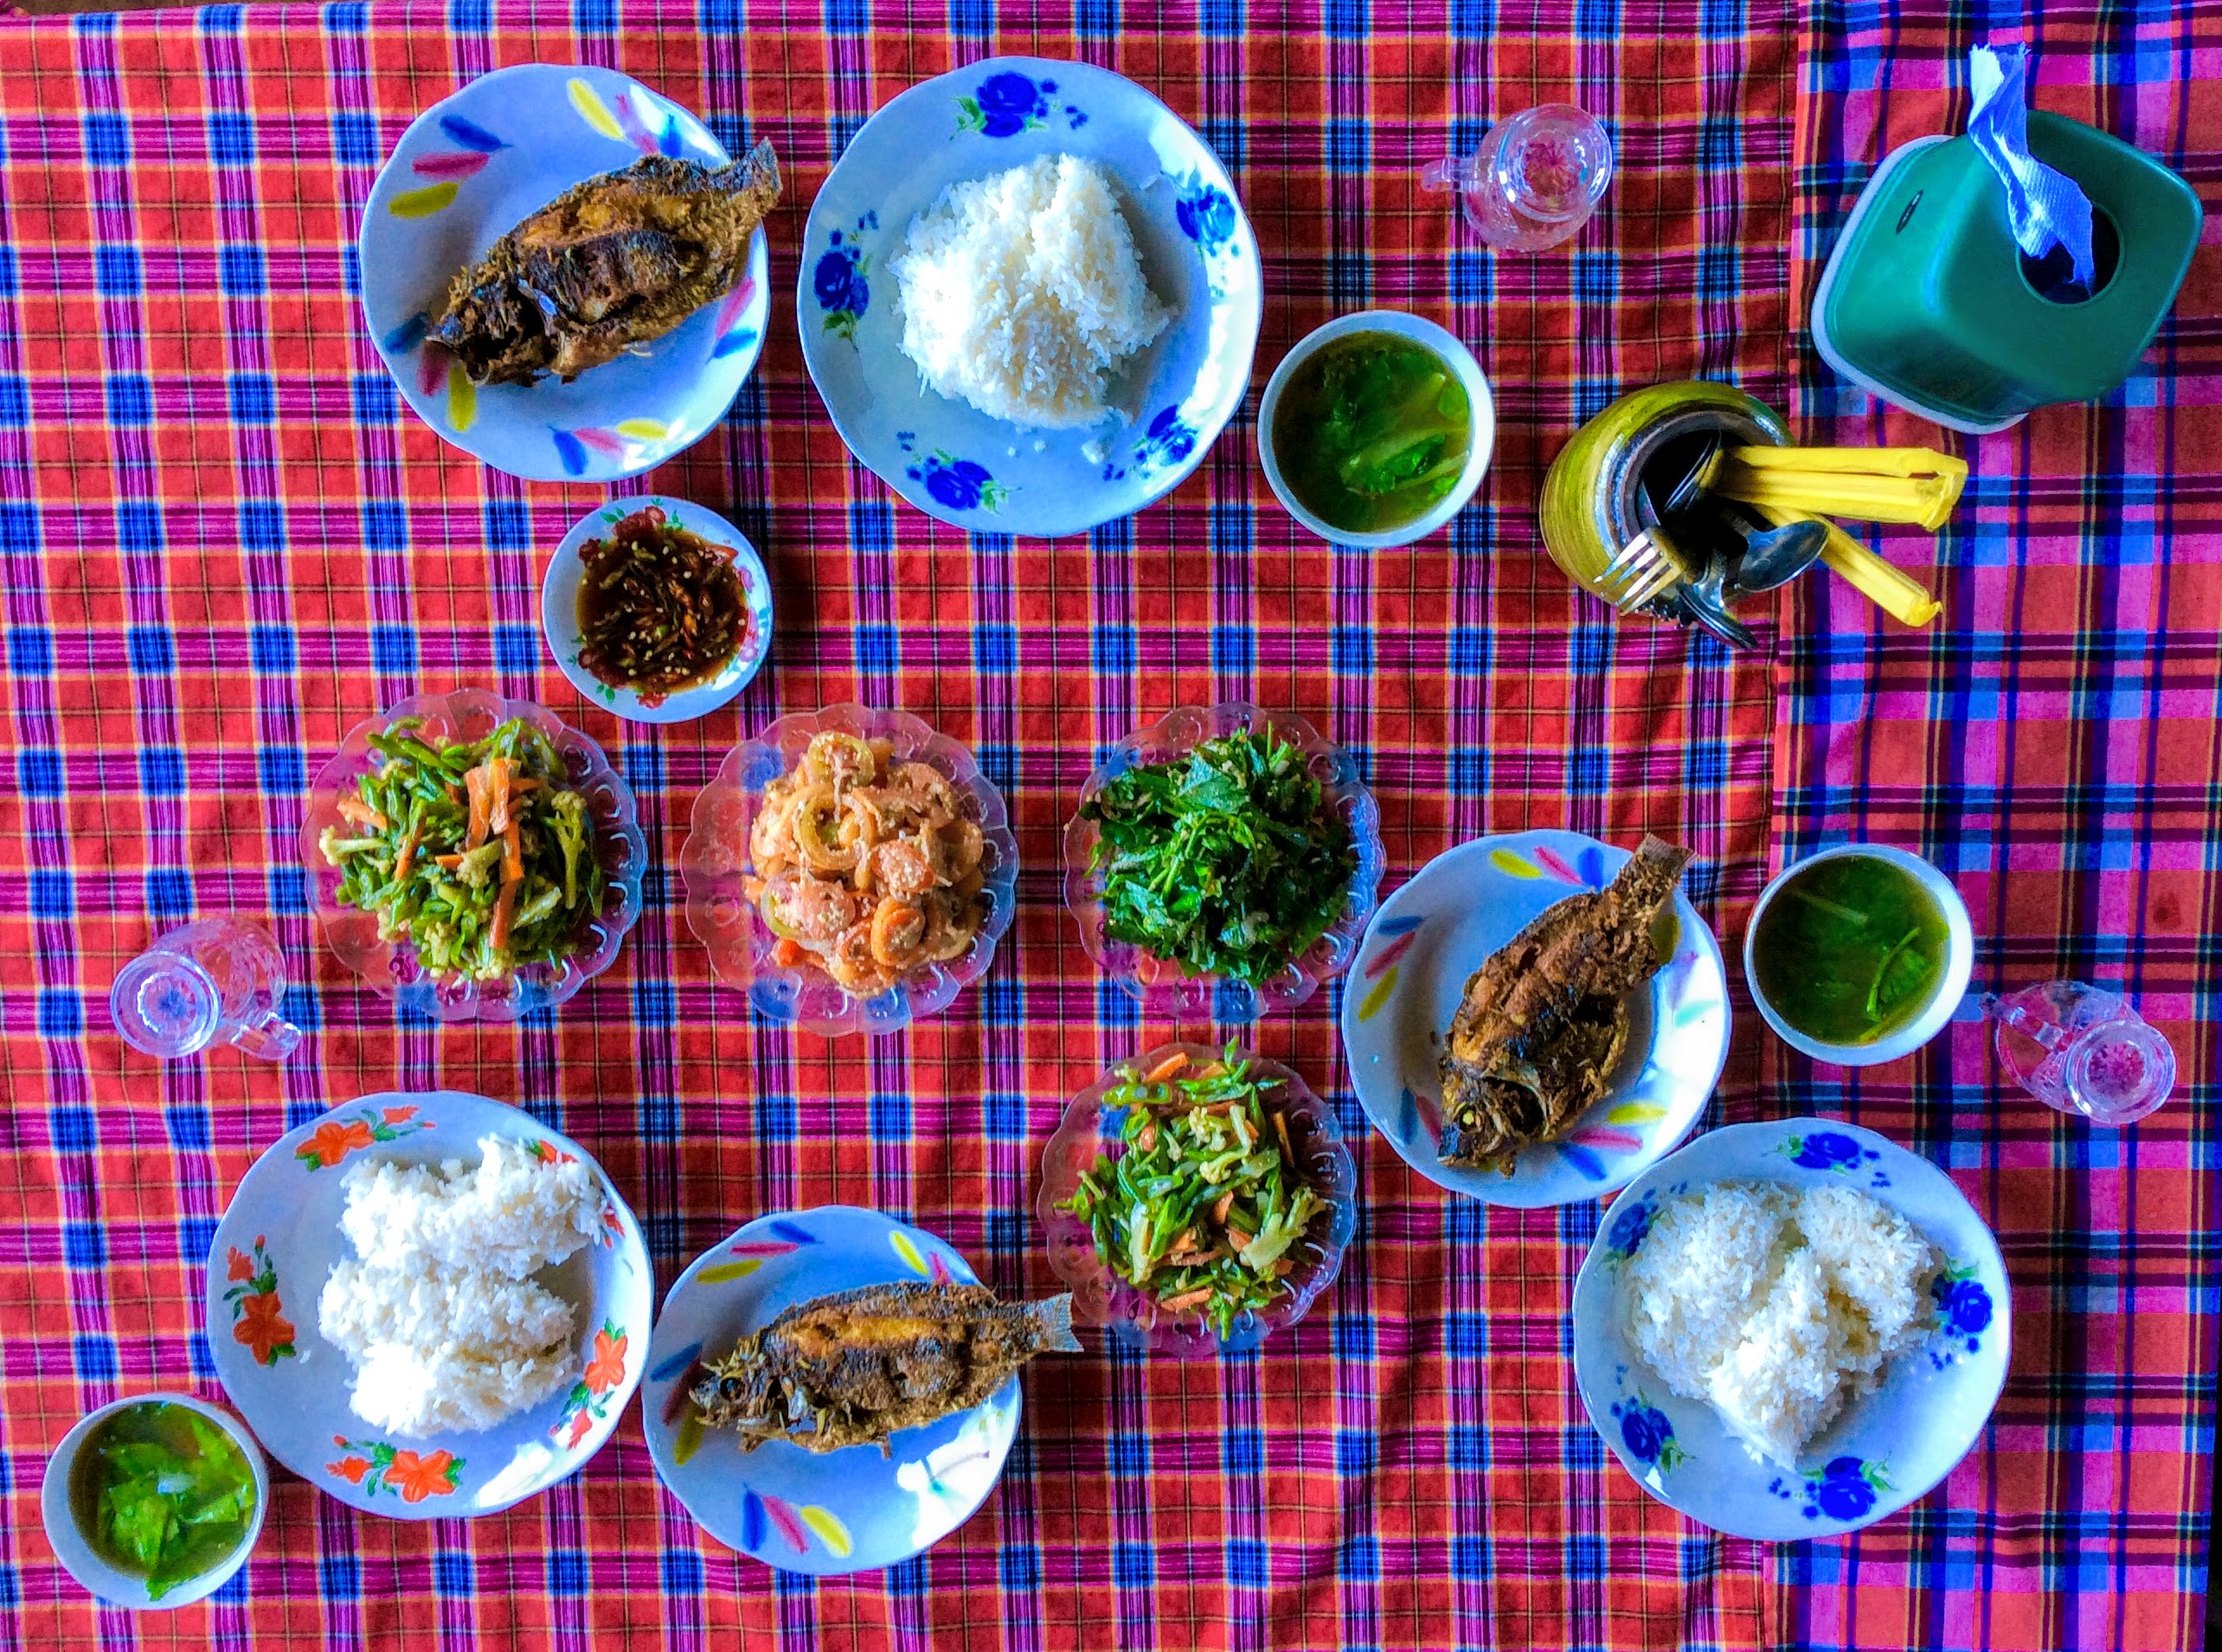 Southeast Asia and India cuisine